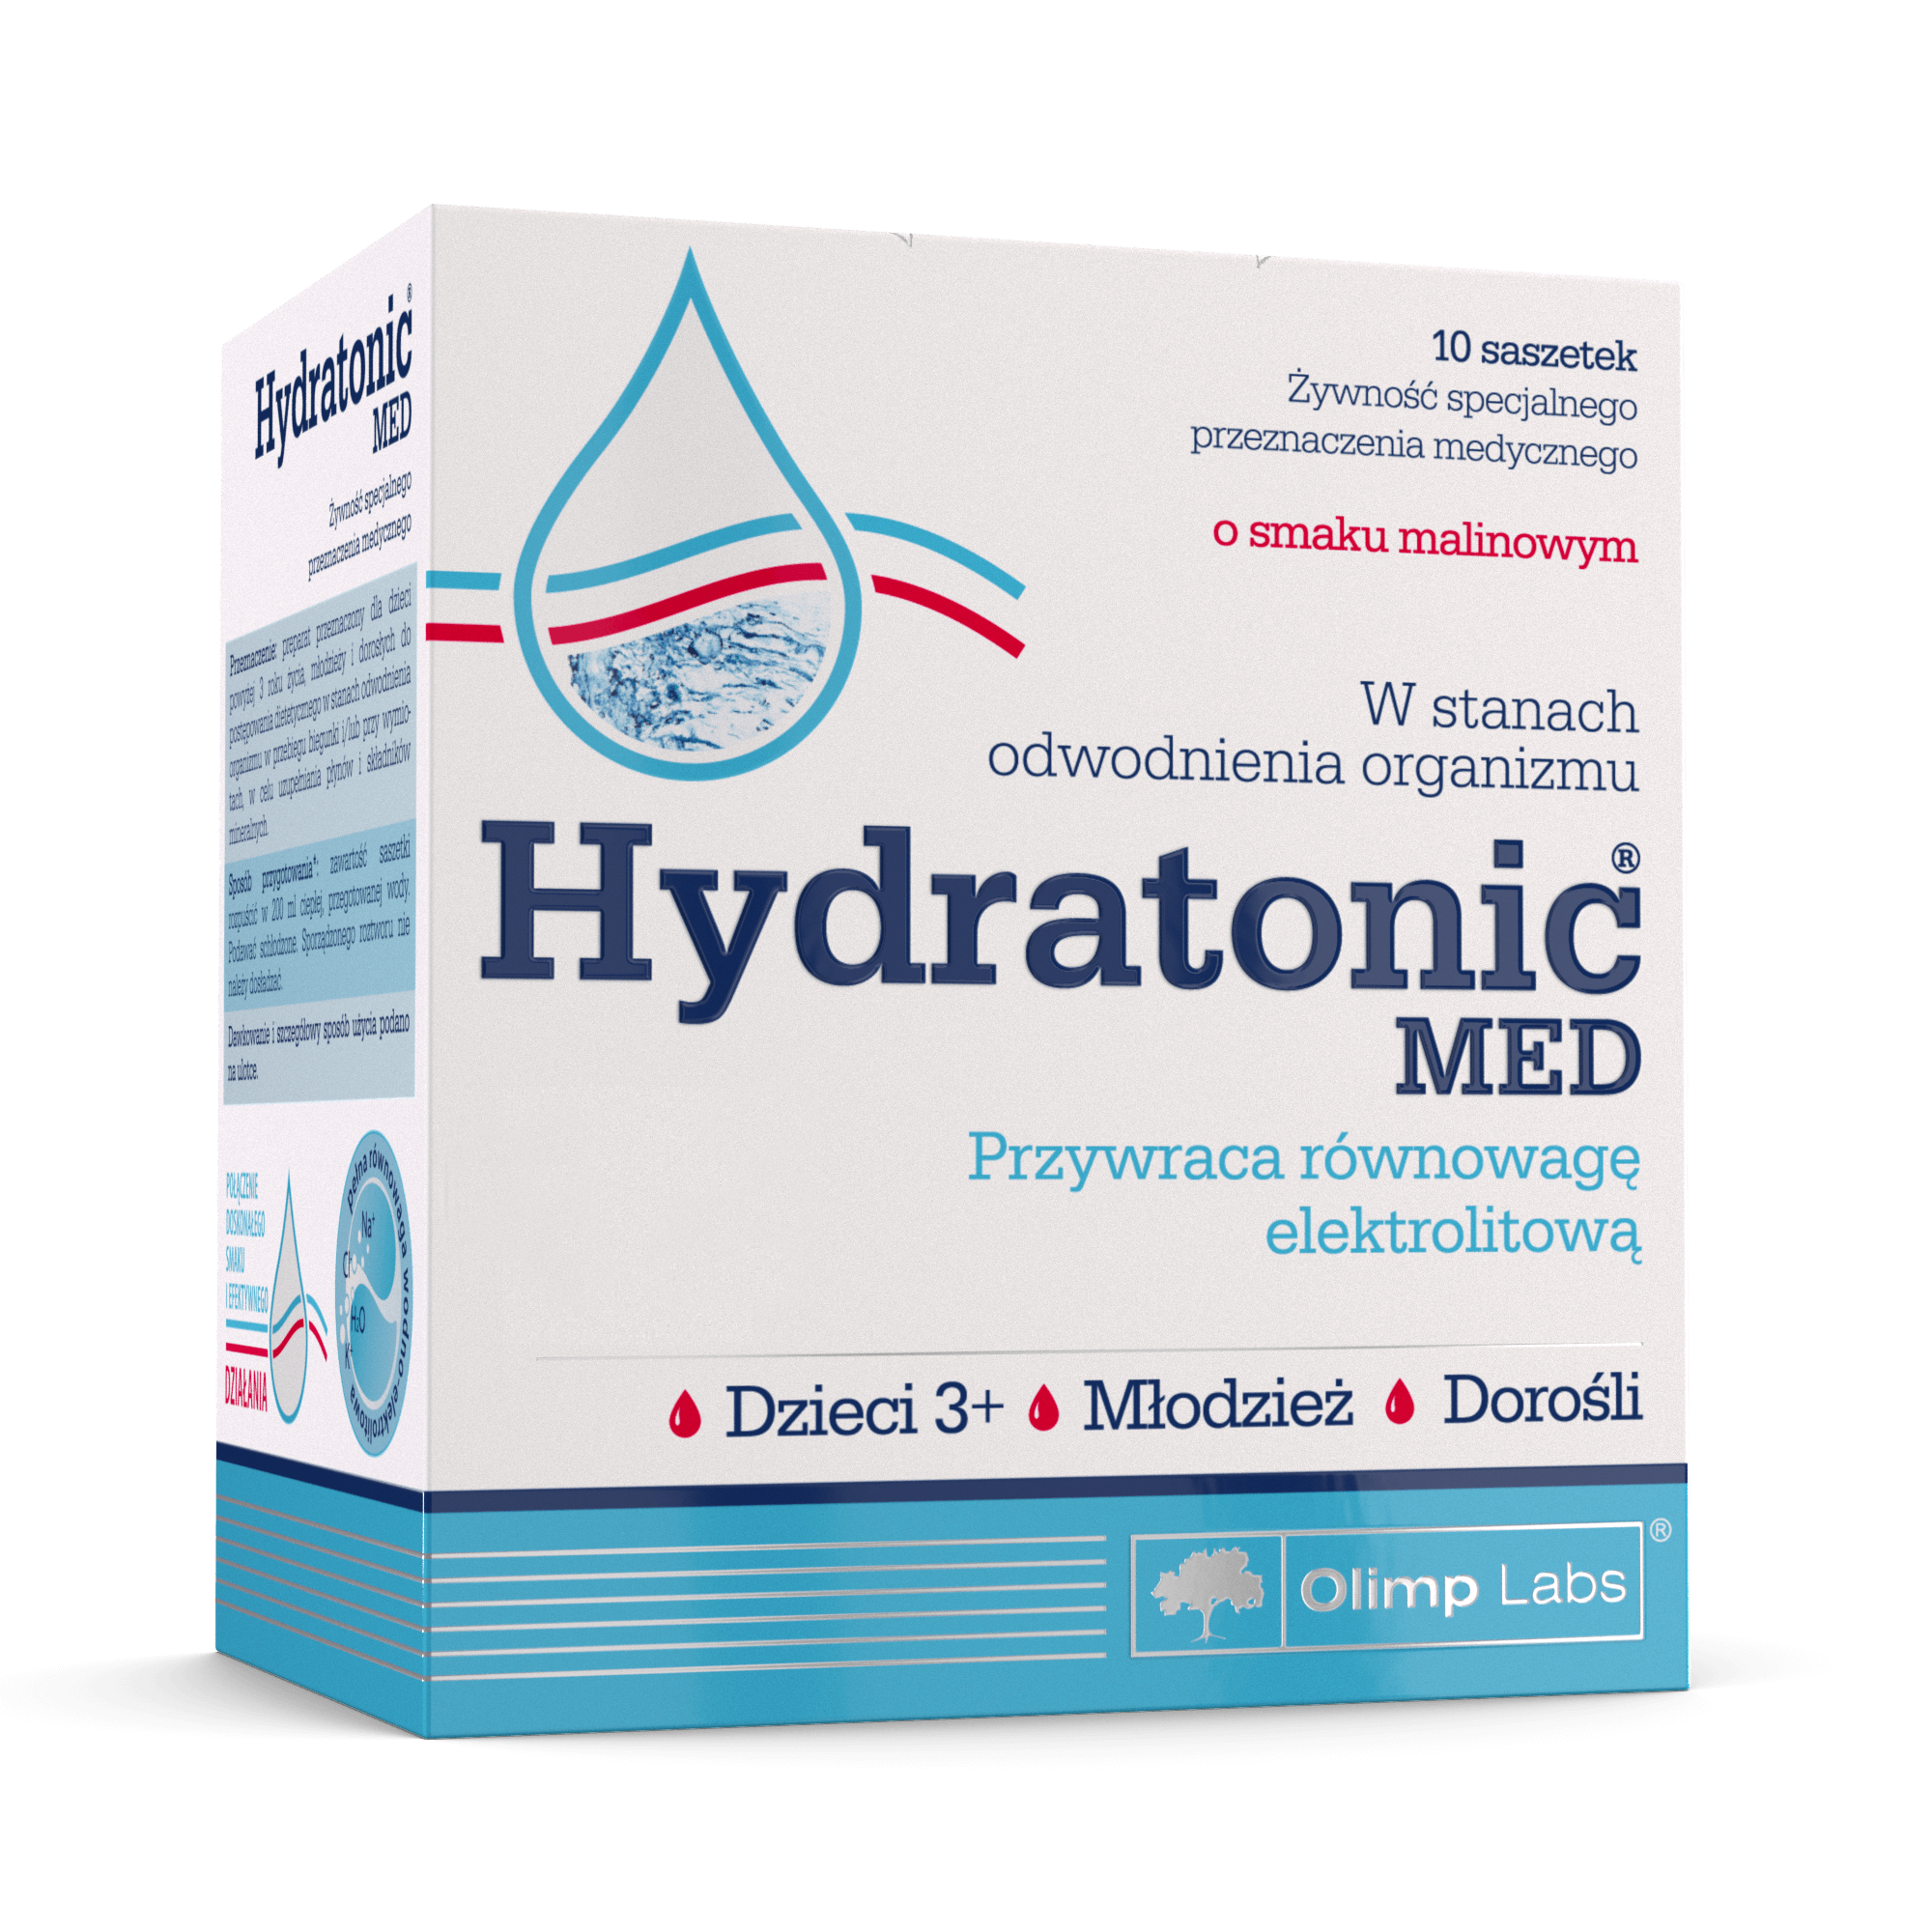 Hydratonic MED